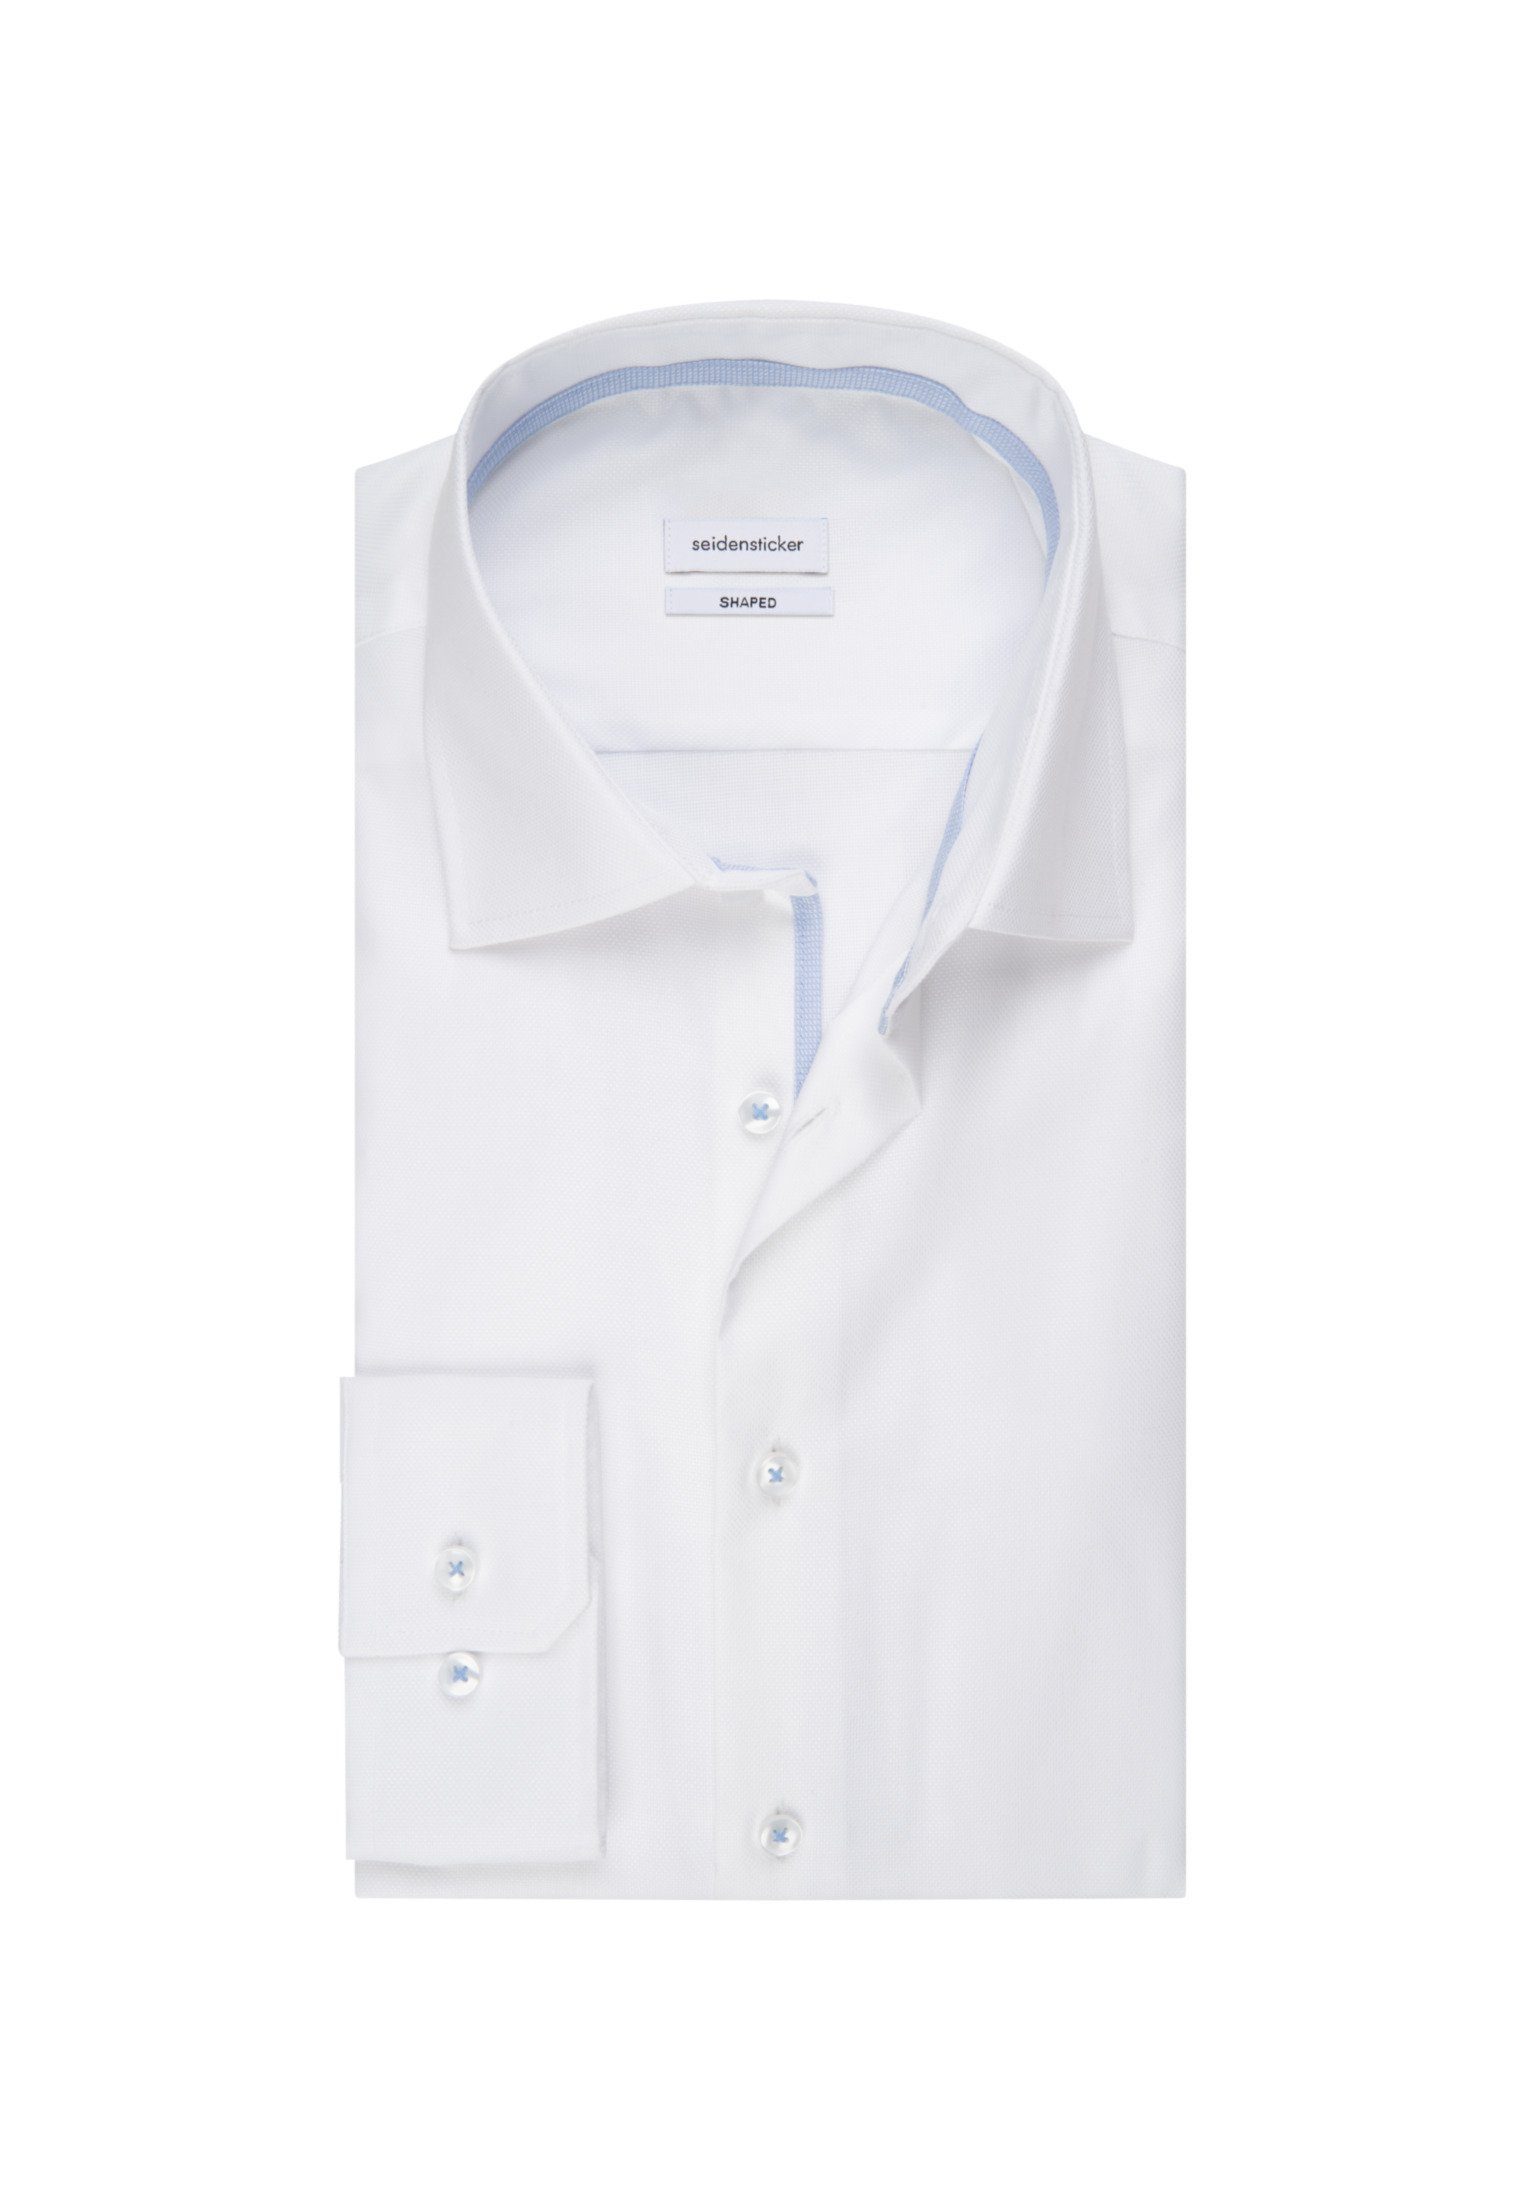 seidensticker Businesshemd Langarm Kentkragen Uni Shaped Weiß Shaped